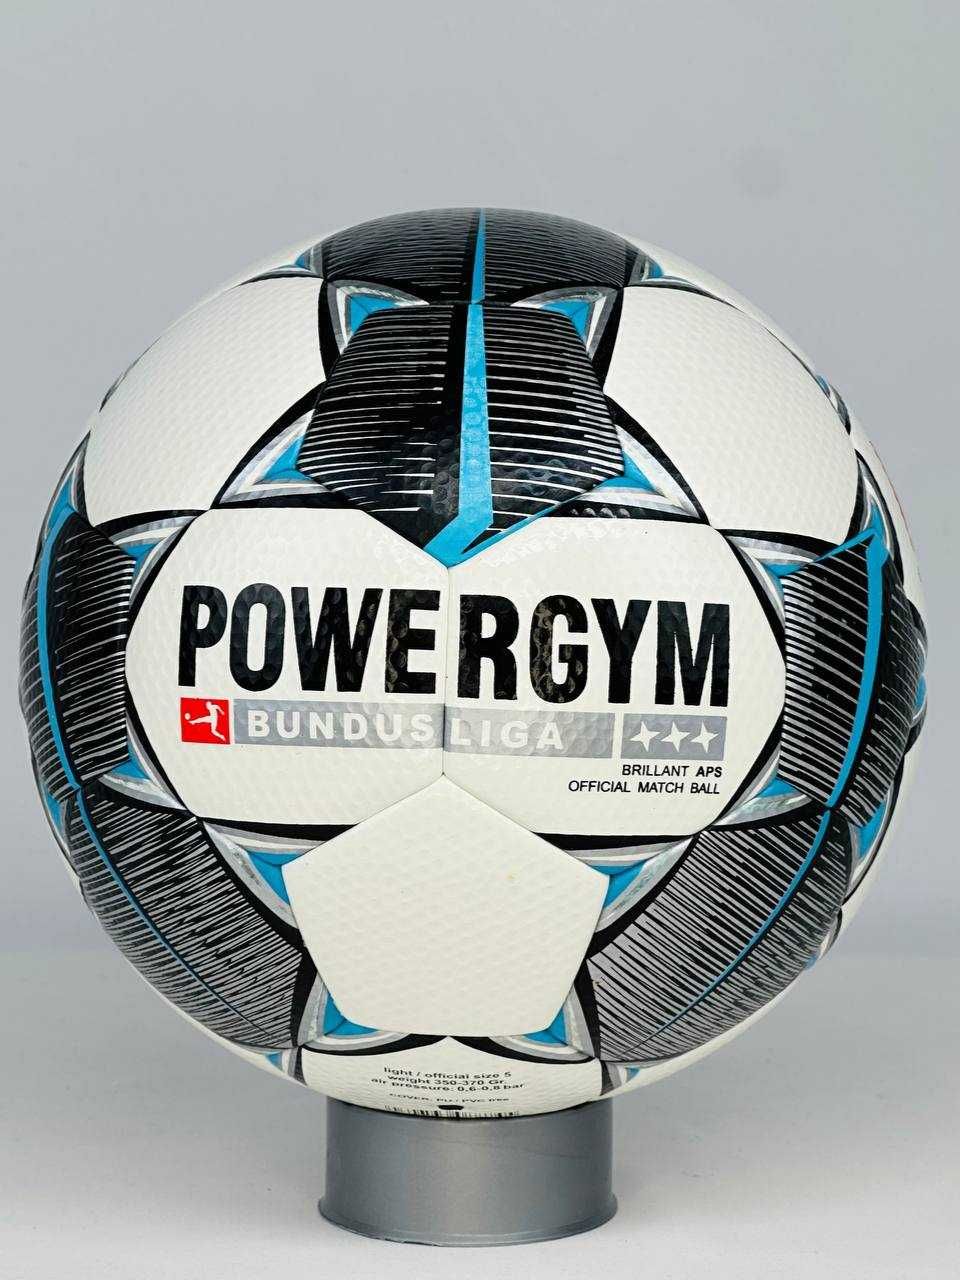 POWERGYM brendidan futbol to'plari | Футбольные мячи бренда POWERGYM